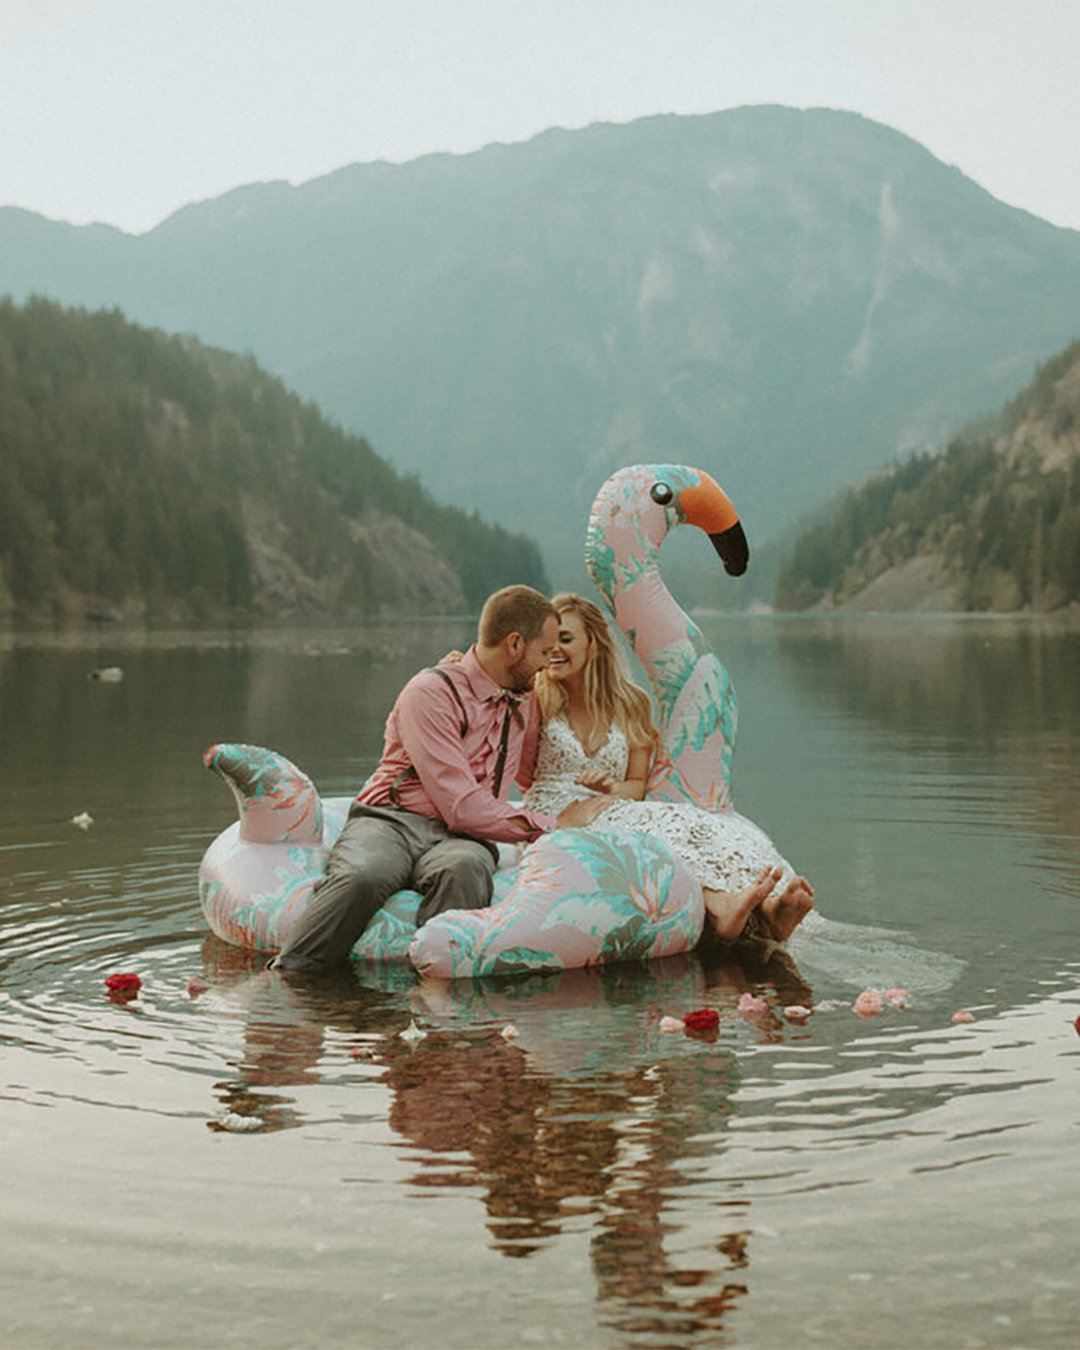 creative wedding photo ideas poses wedding photo in lake dawn photo